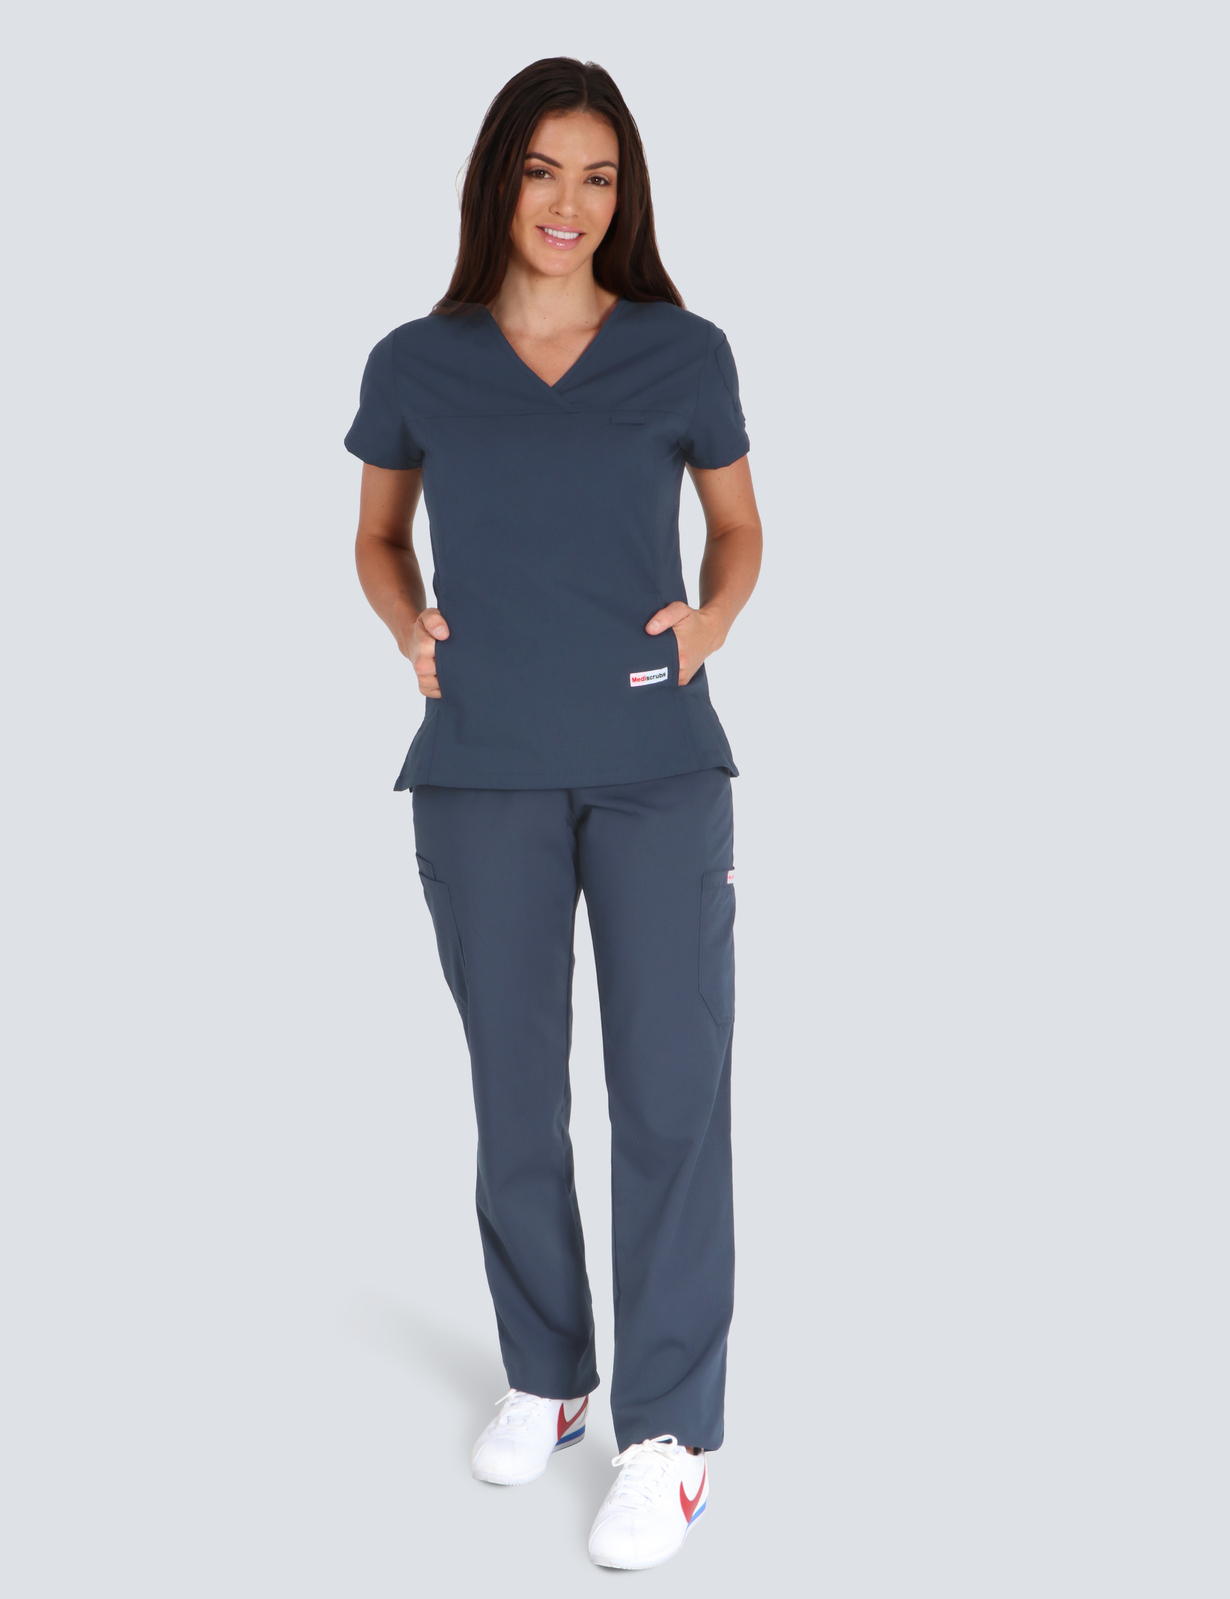 Regional Queensland Nurse Practitioner Uniform Set Bundle (Women's Fit Solid Top and Cargo Pants incl Logos)  